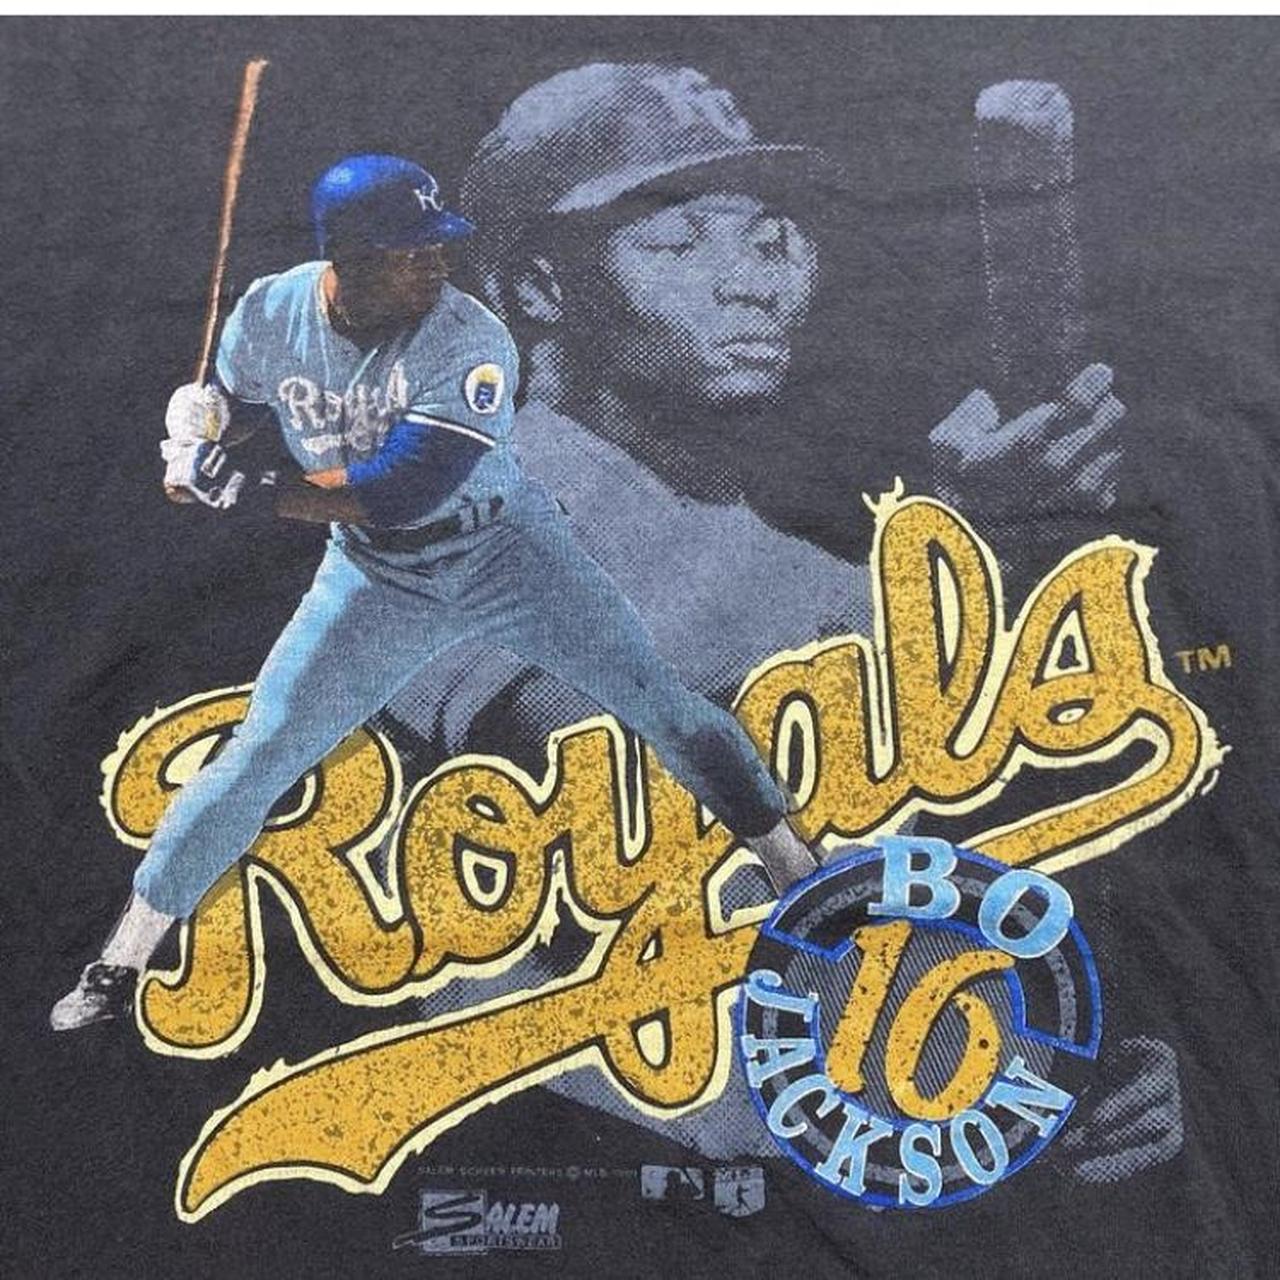 Vintage Bo Jackson T Shirt Salem Baseball Royals SIZE X-Large